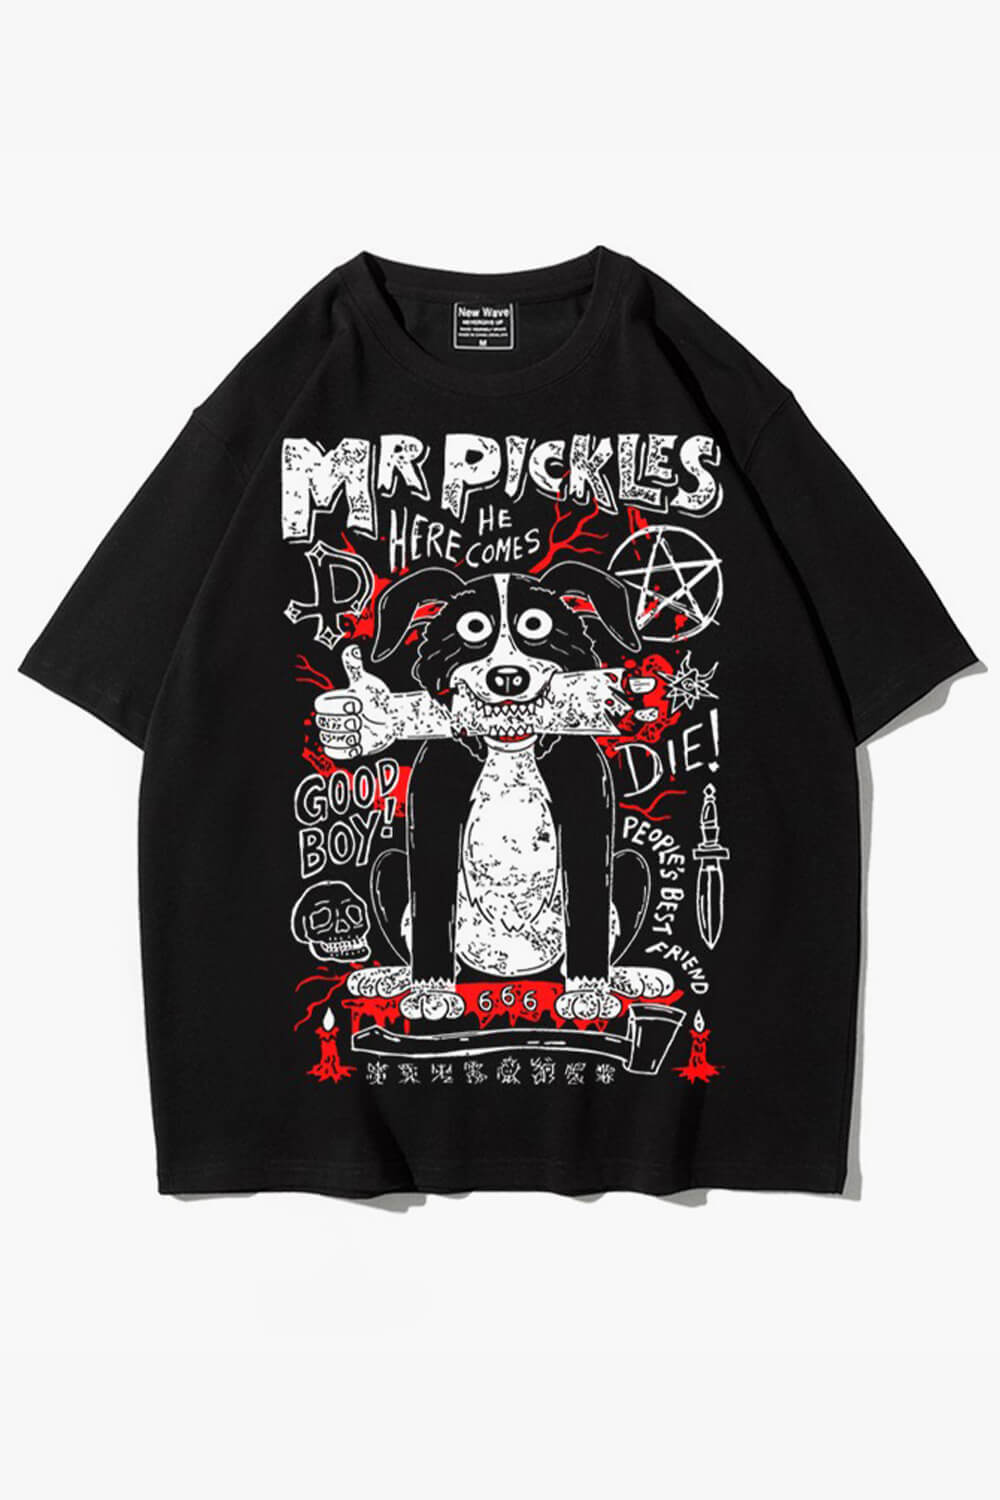 Mr. Pickles T-shirt Good Boy Black - Idolstore - Merchandise And